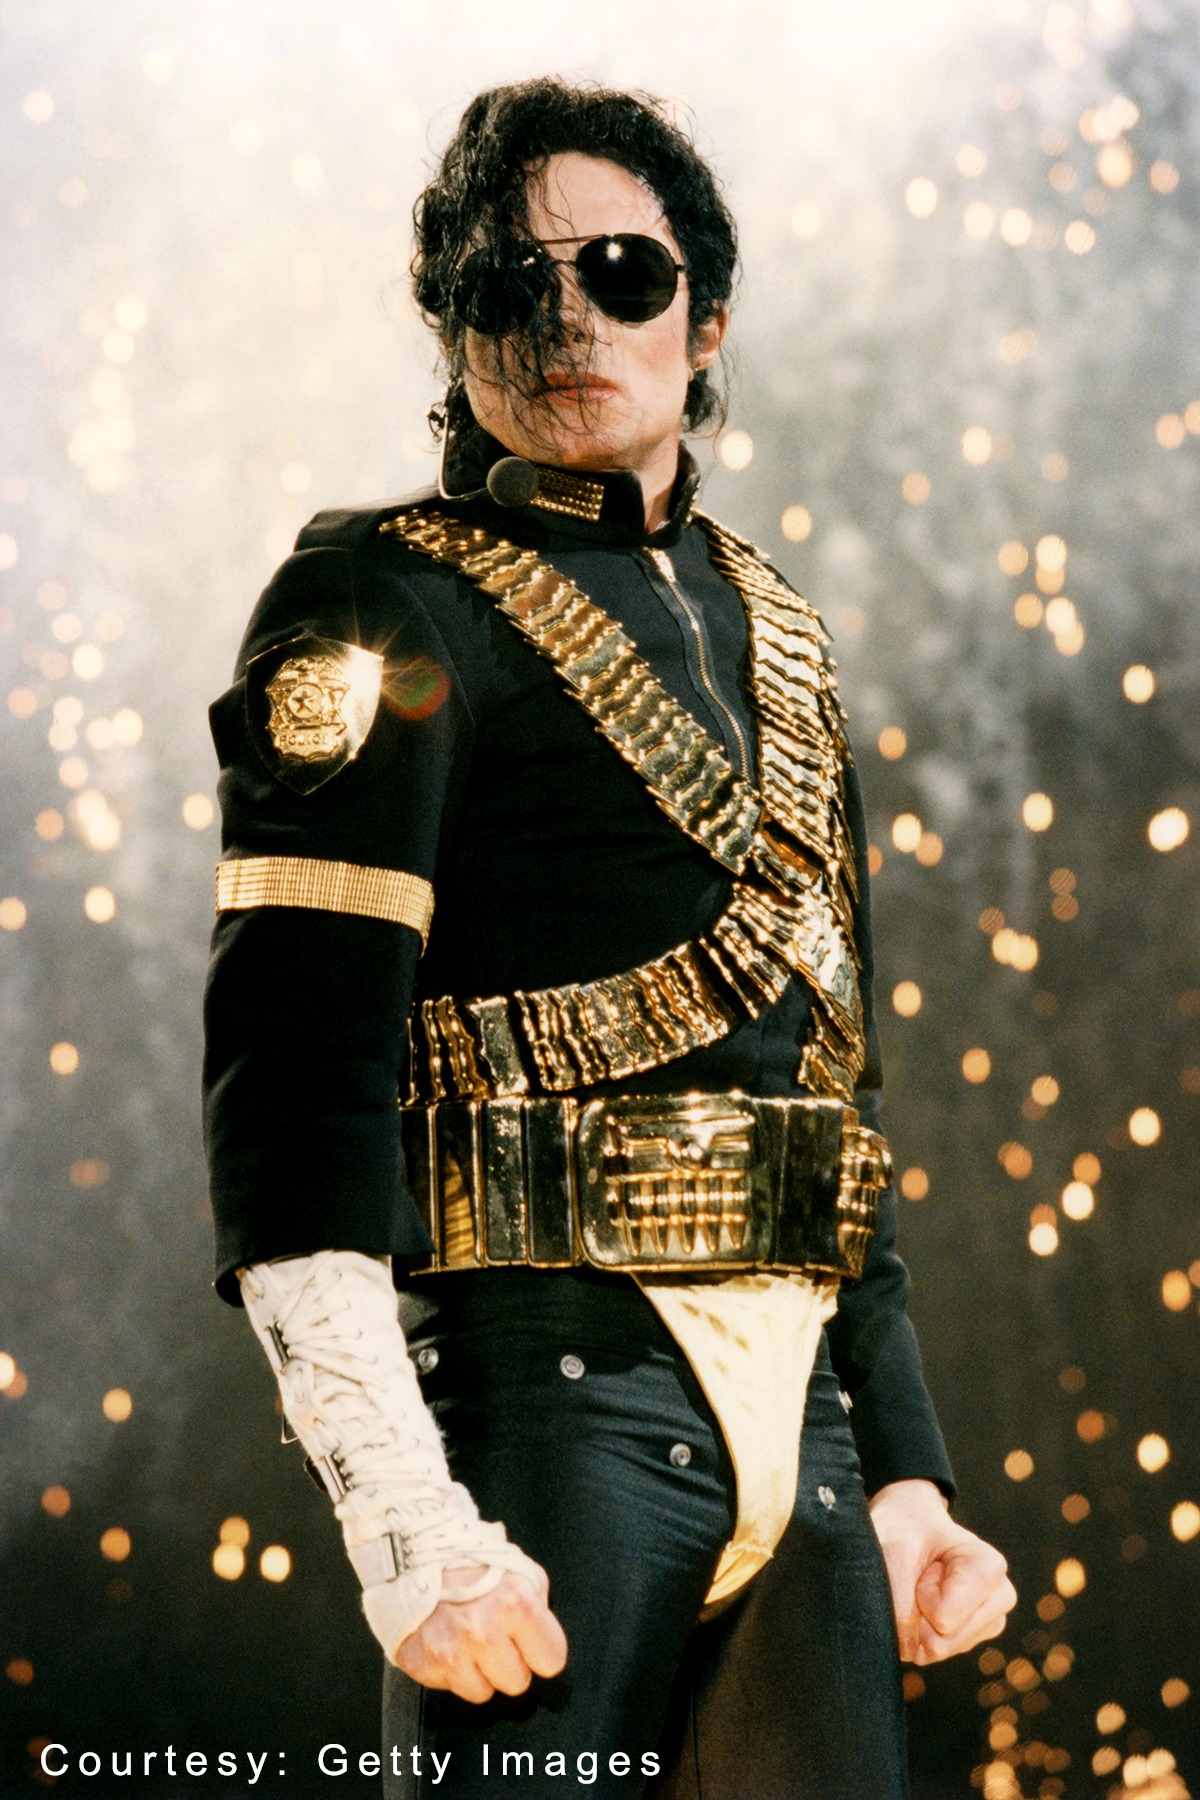 jævnt Ark Terminal Michael Jackson on Twitter: "All hail The King Of Pop! What is your  favorite Michael song? https://t.co/fjfM8CXVJx" / Twitter